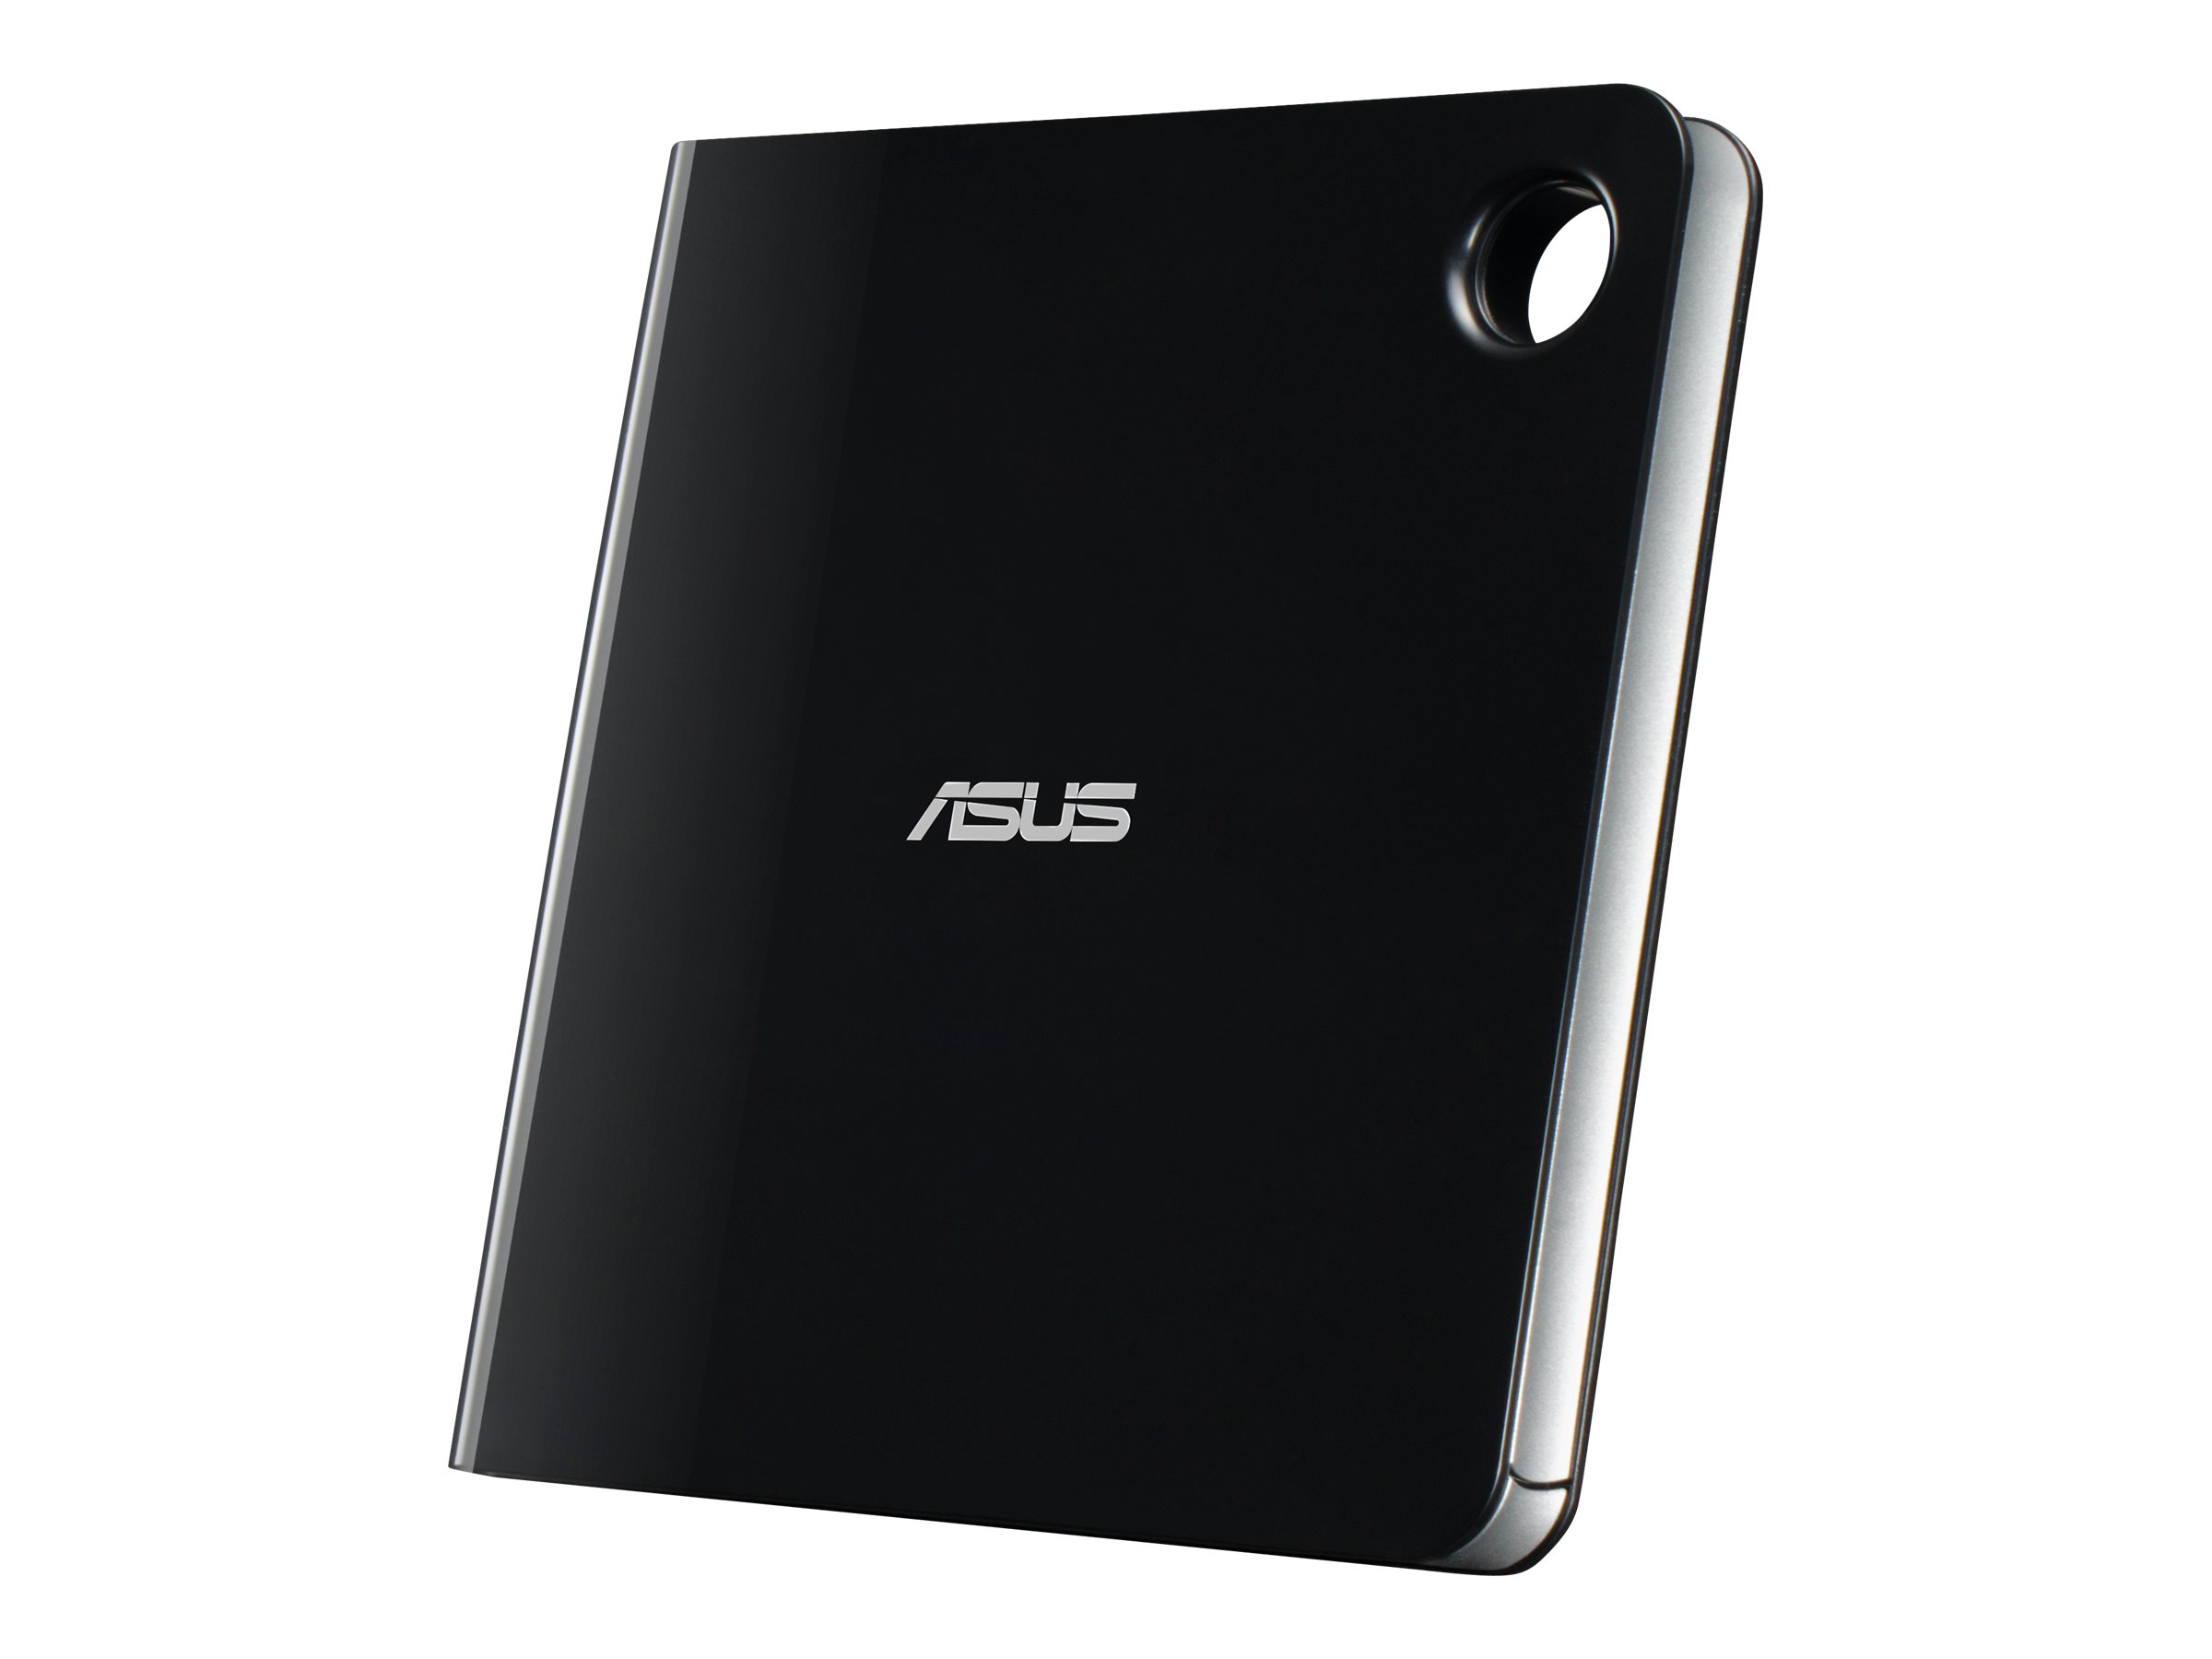 ASUS SBW-06D5H-U Blu-Ray Brenner, SlimLine extern, USB 3.0 - schwarz